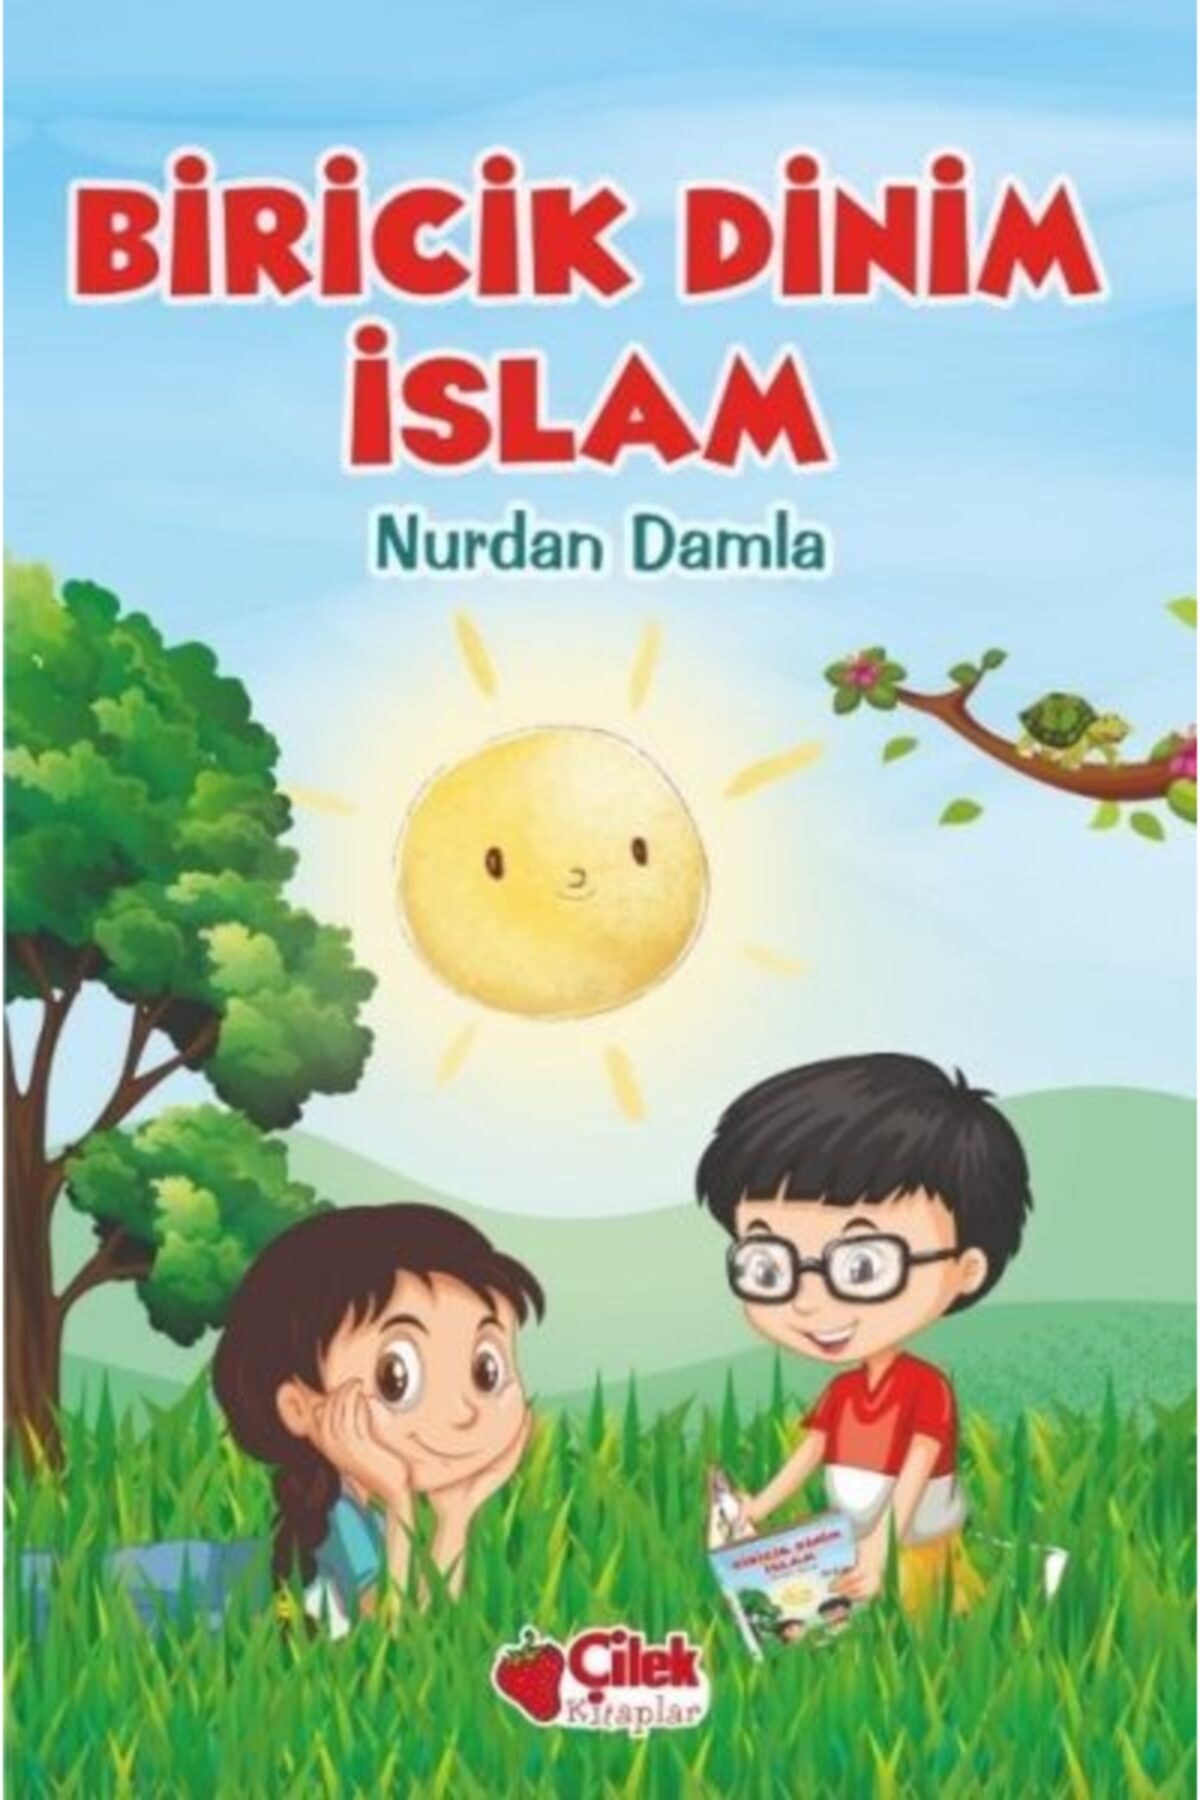 Biricik Dinim Islam